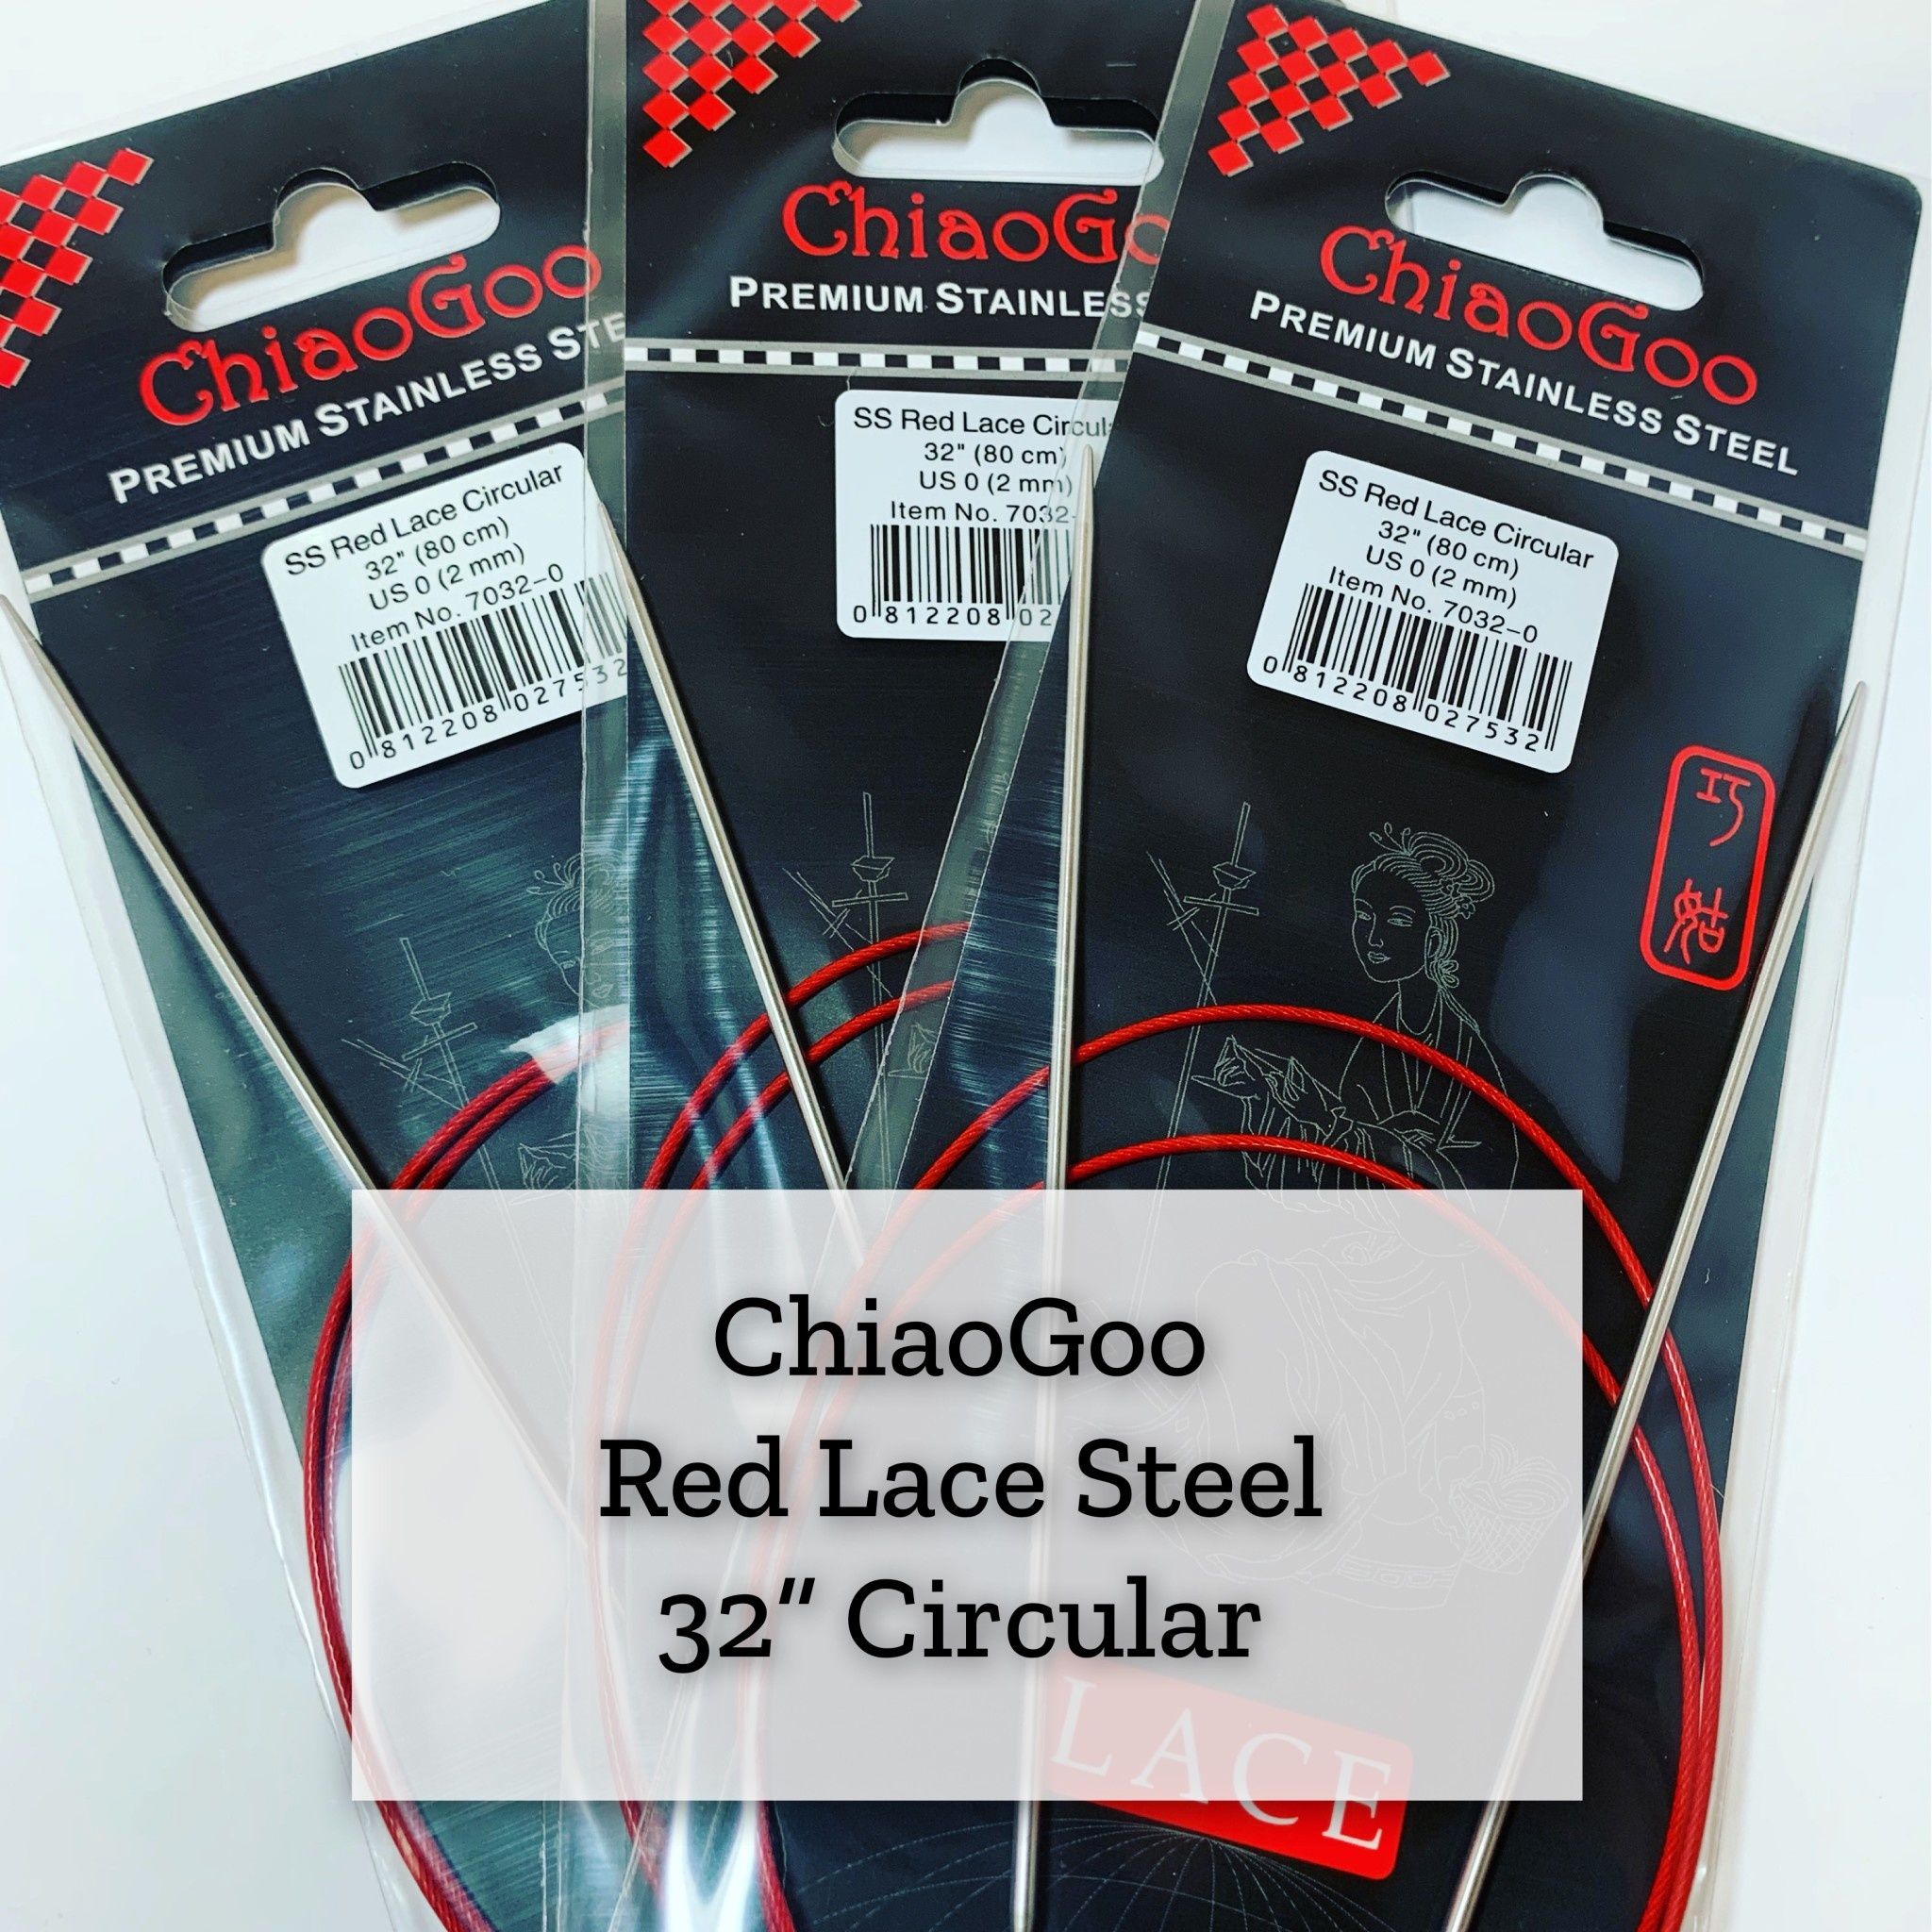 ChiaoGoo Red Lace Steel - 32" 4 mm